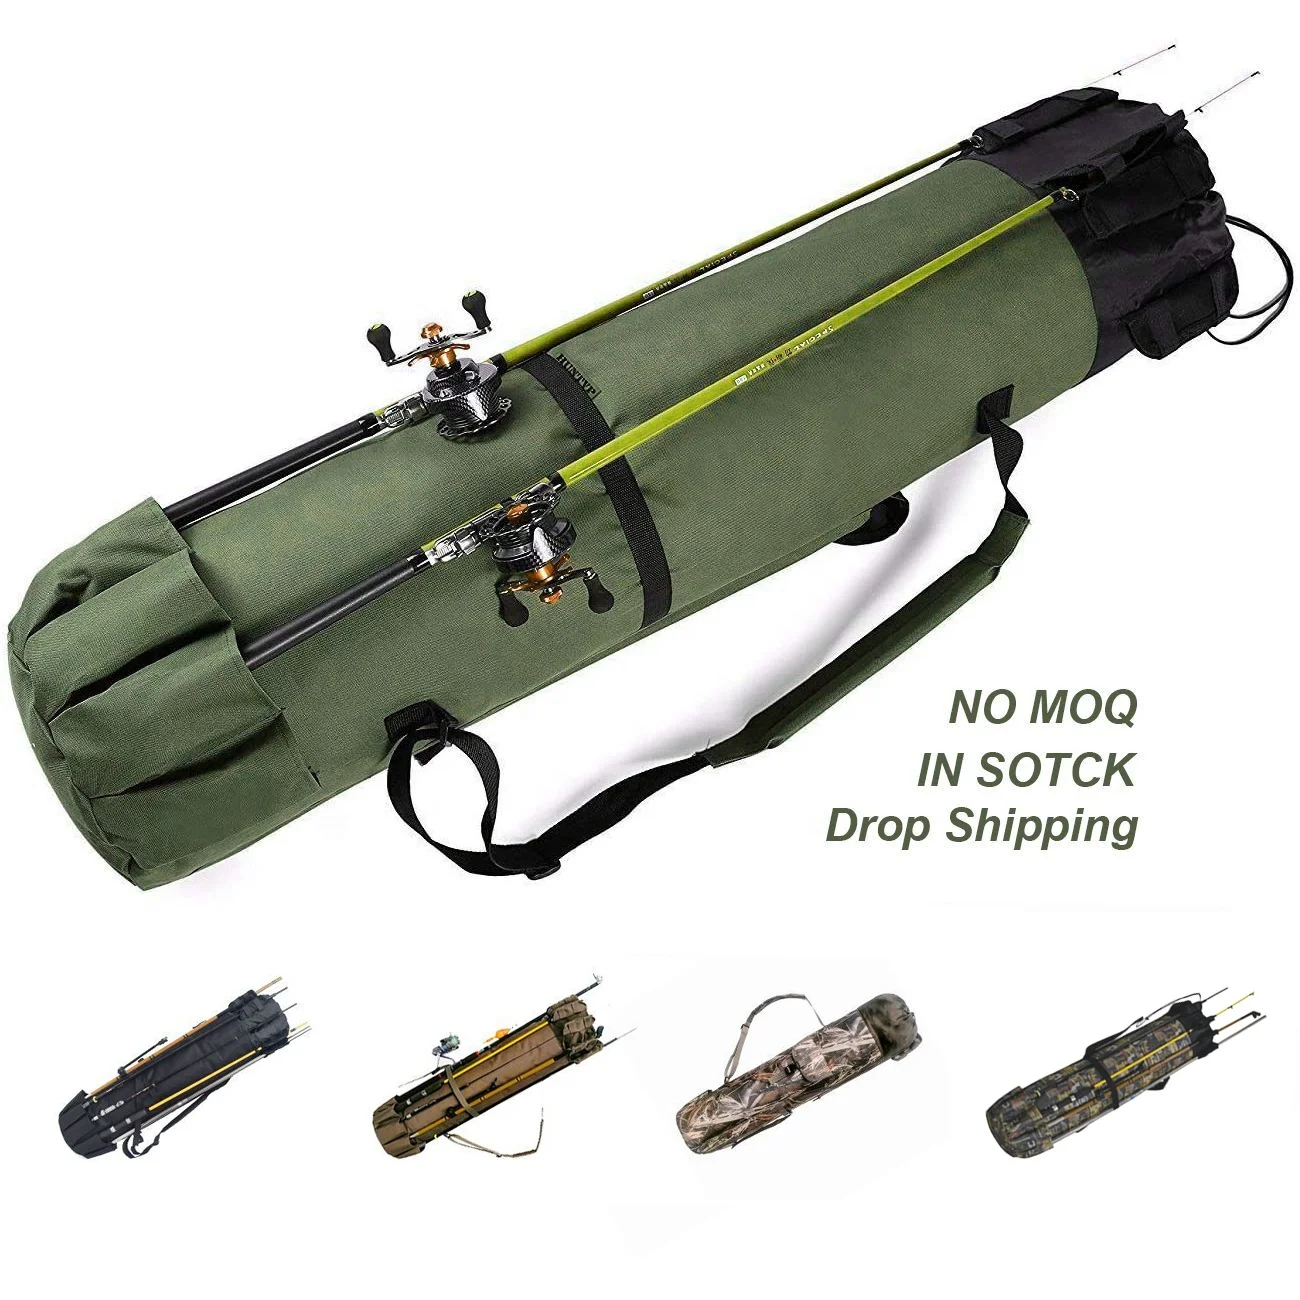 

Wholesale Waterproof Portable Heavy Duty Large Capacity Fly 155cm Holder Colourful Carrying Case Hard Fishing Tackle Rod Bag, Green, black,khaki,camo